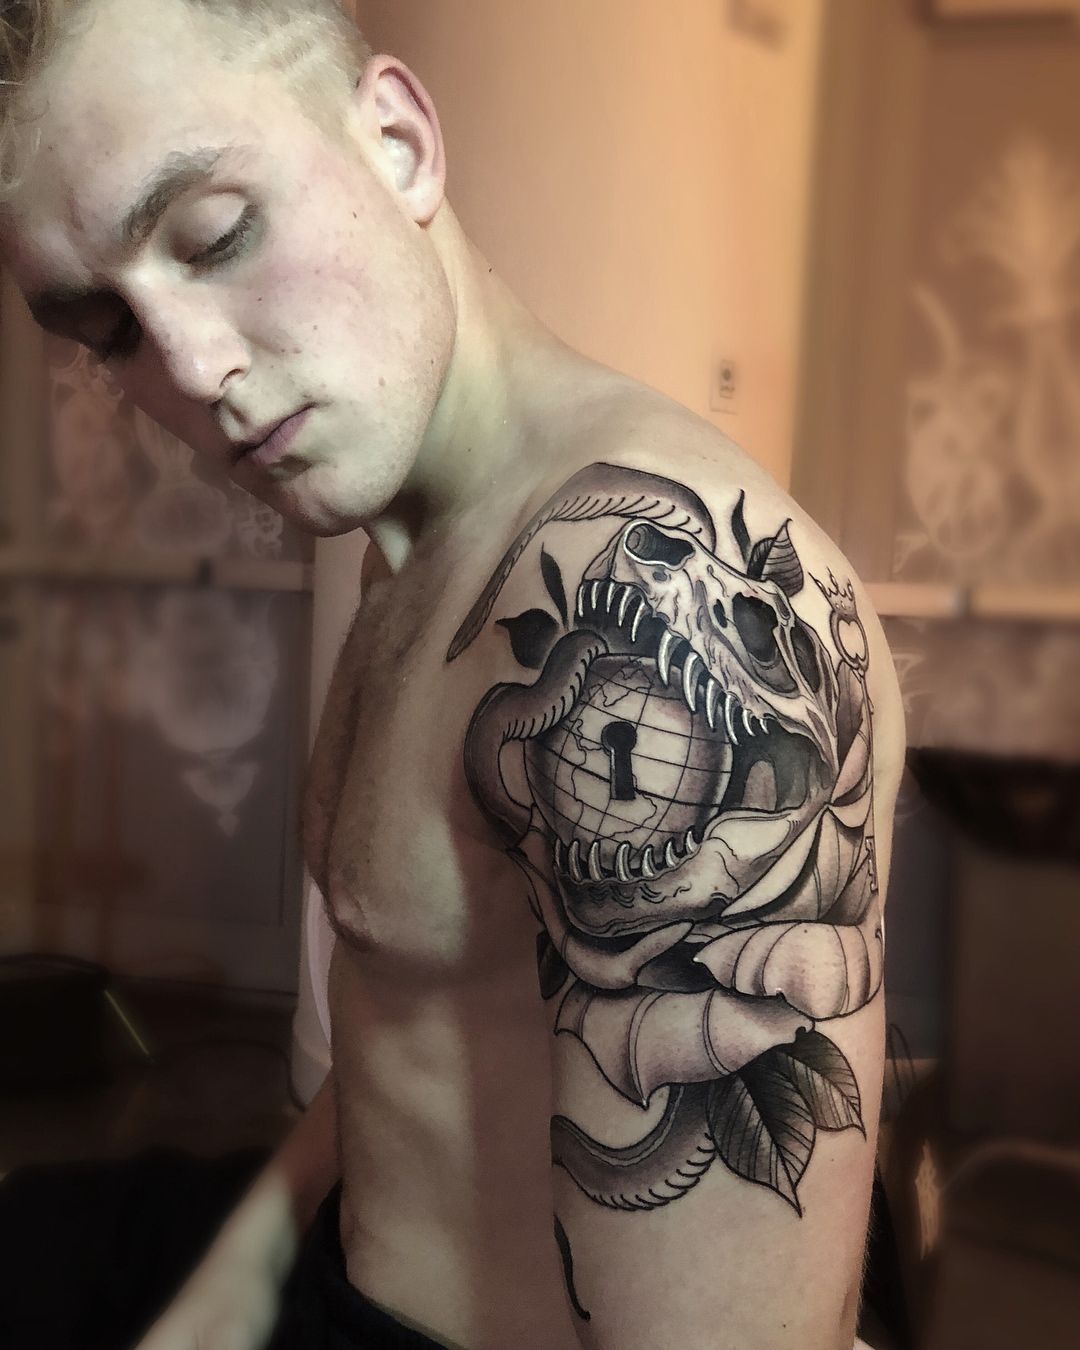 Jake Paul Tattoo Images - Jake Paul Arm Tattoo , HD Wallpaper & Backgrounds